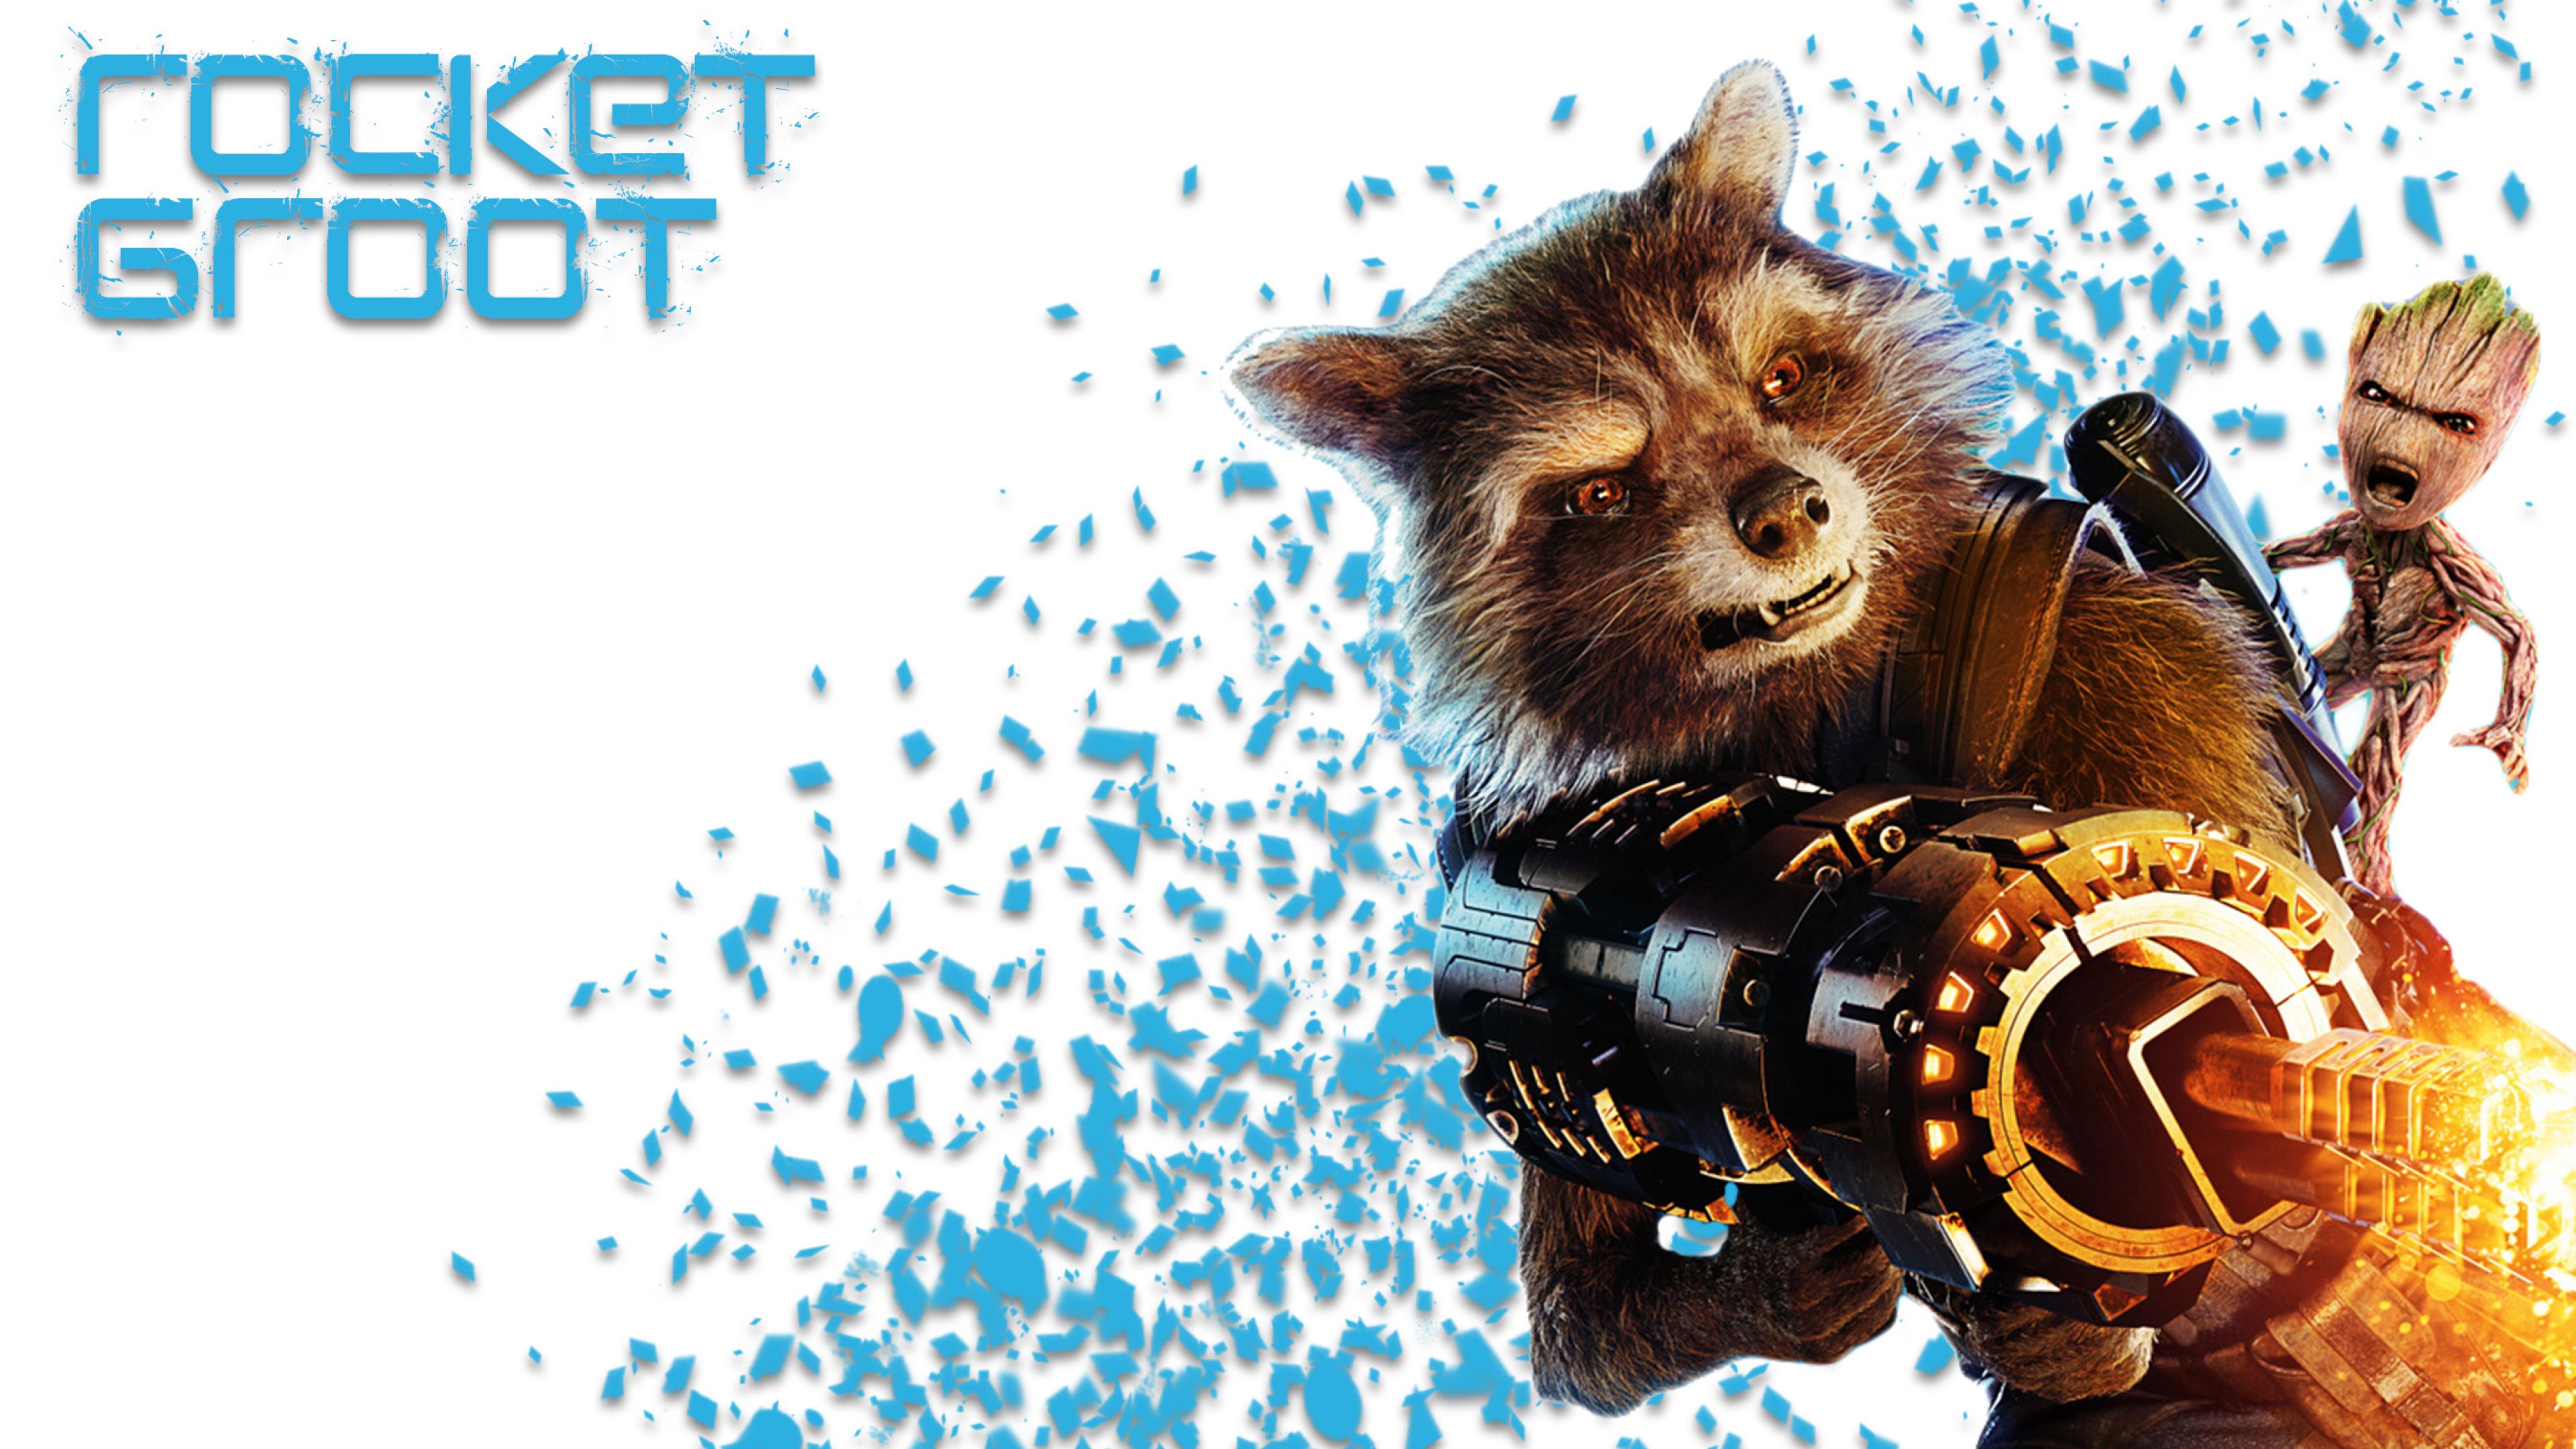 Avengers: Infinity War (2018) Rocket Raccoon and Baby Groot 4K UHD